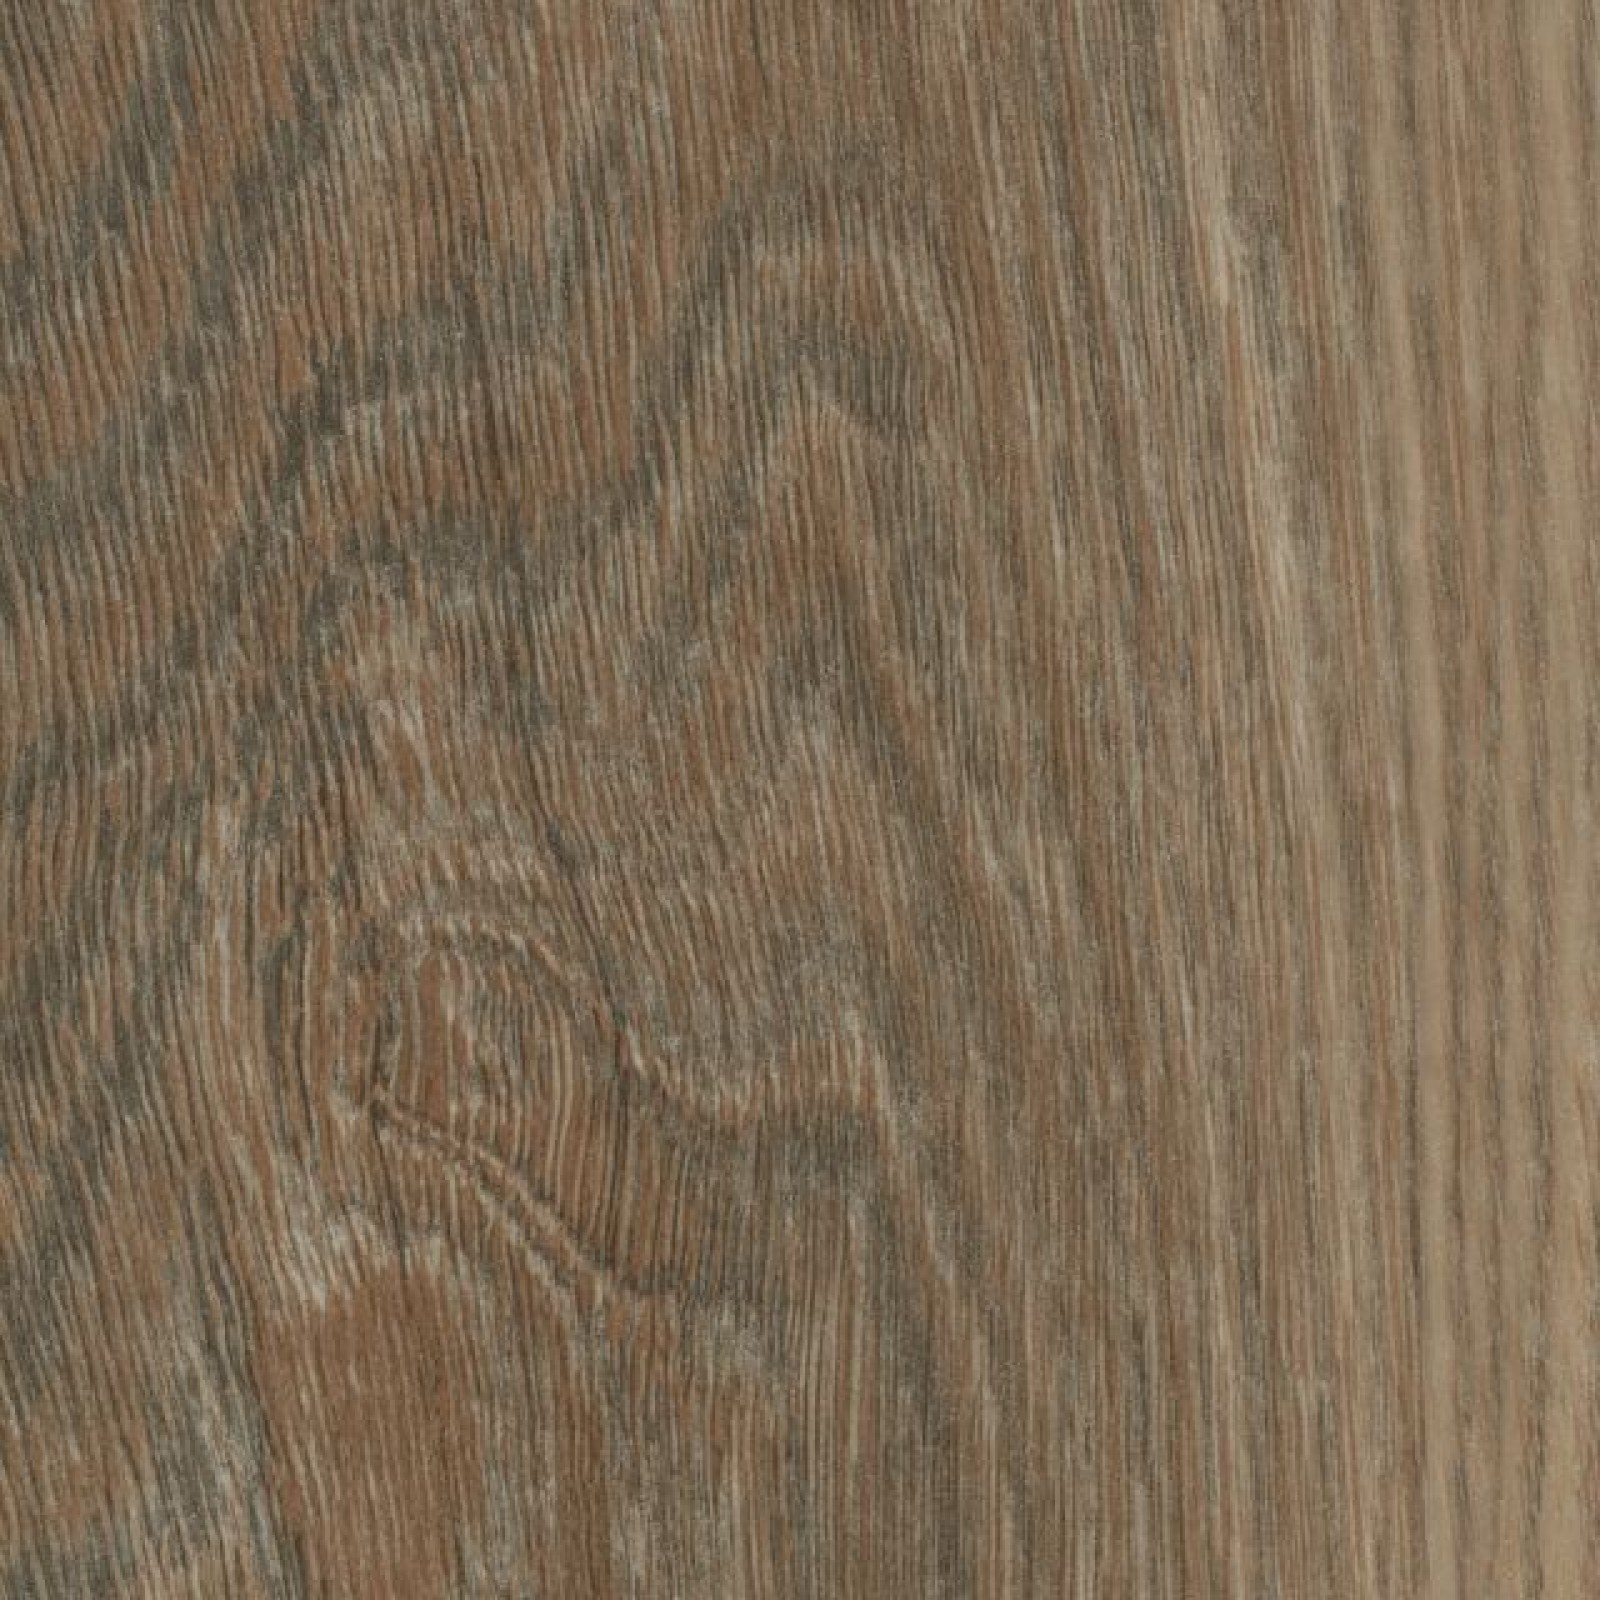 Vzor - 60187 natural weathered oak